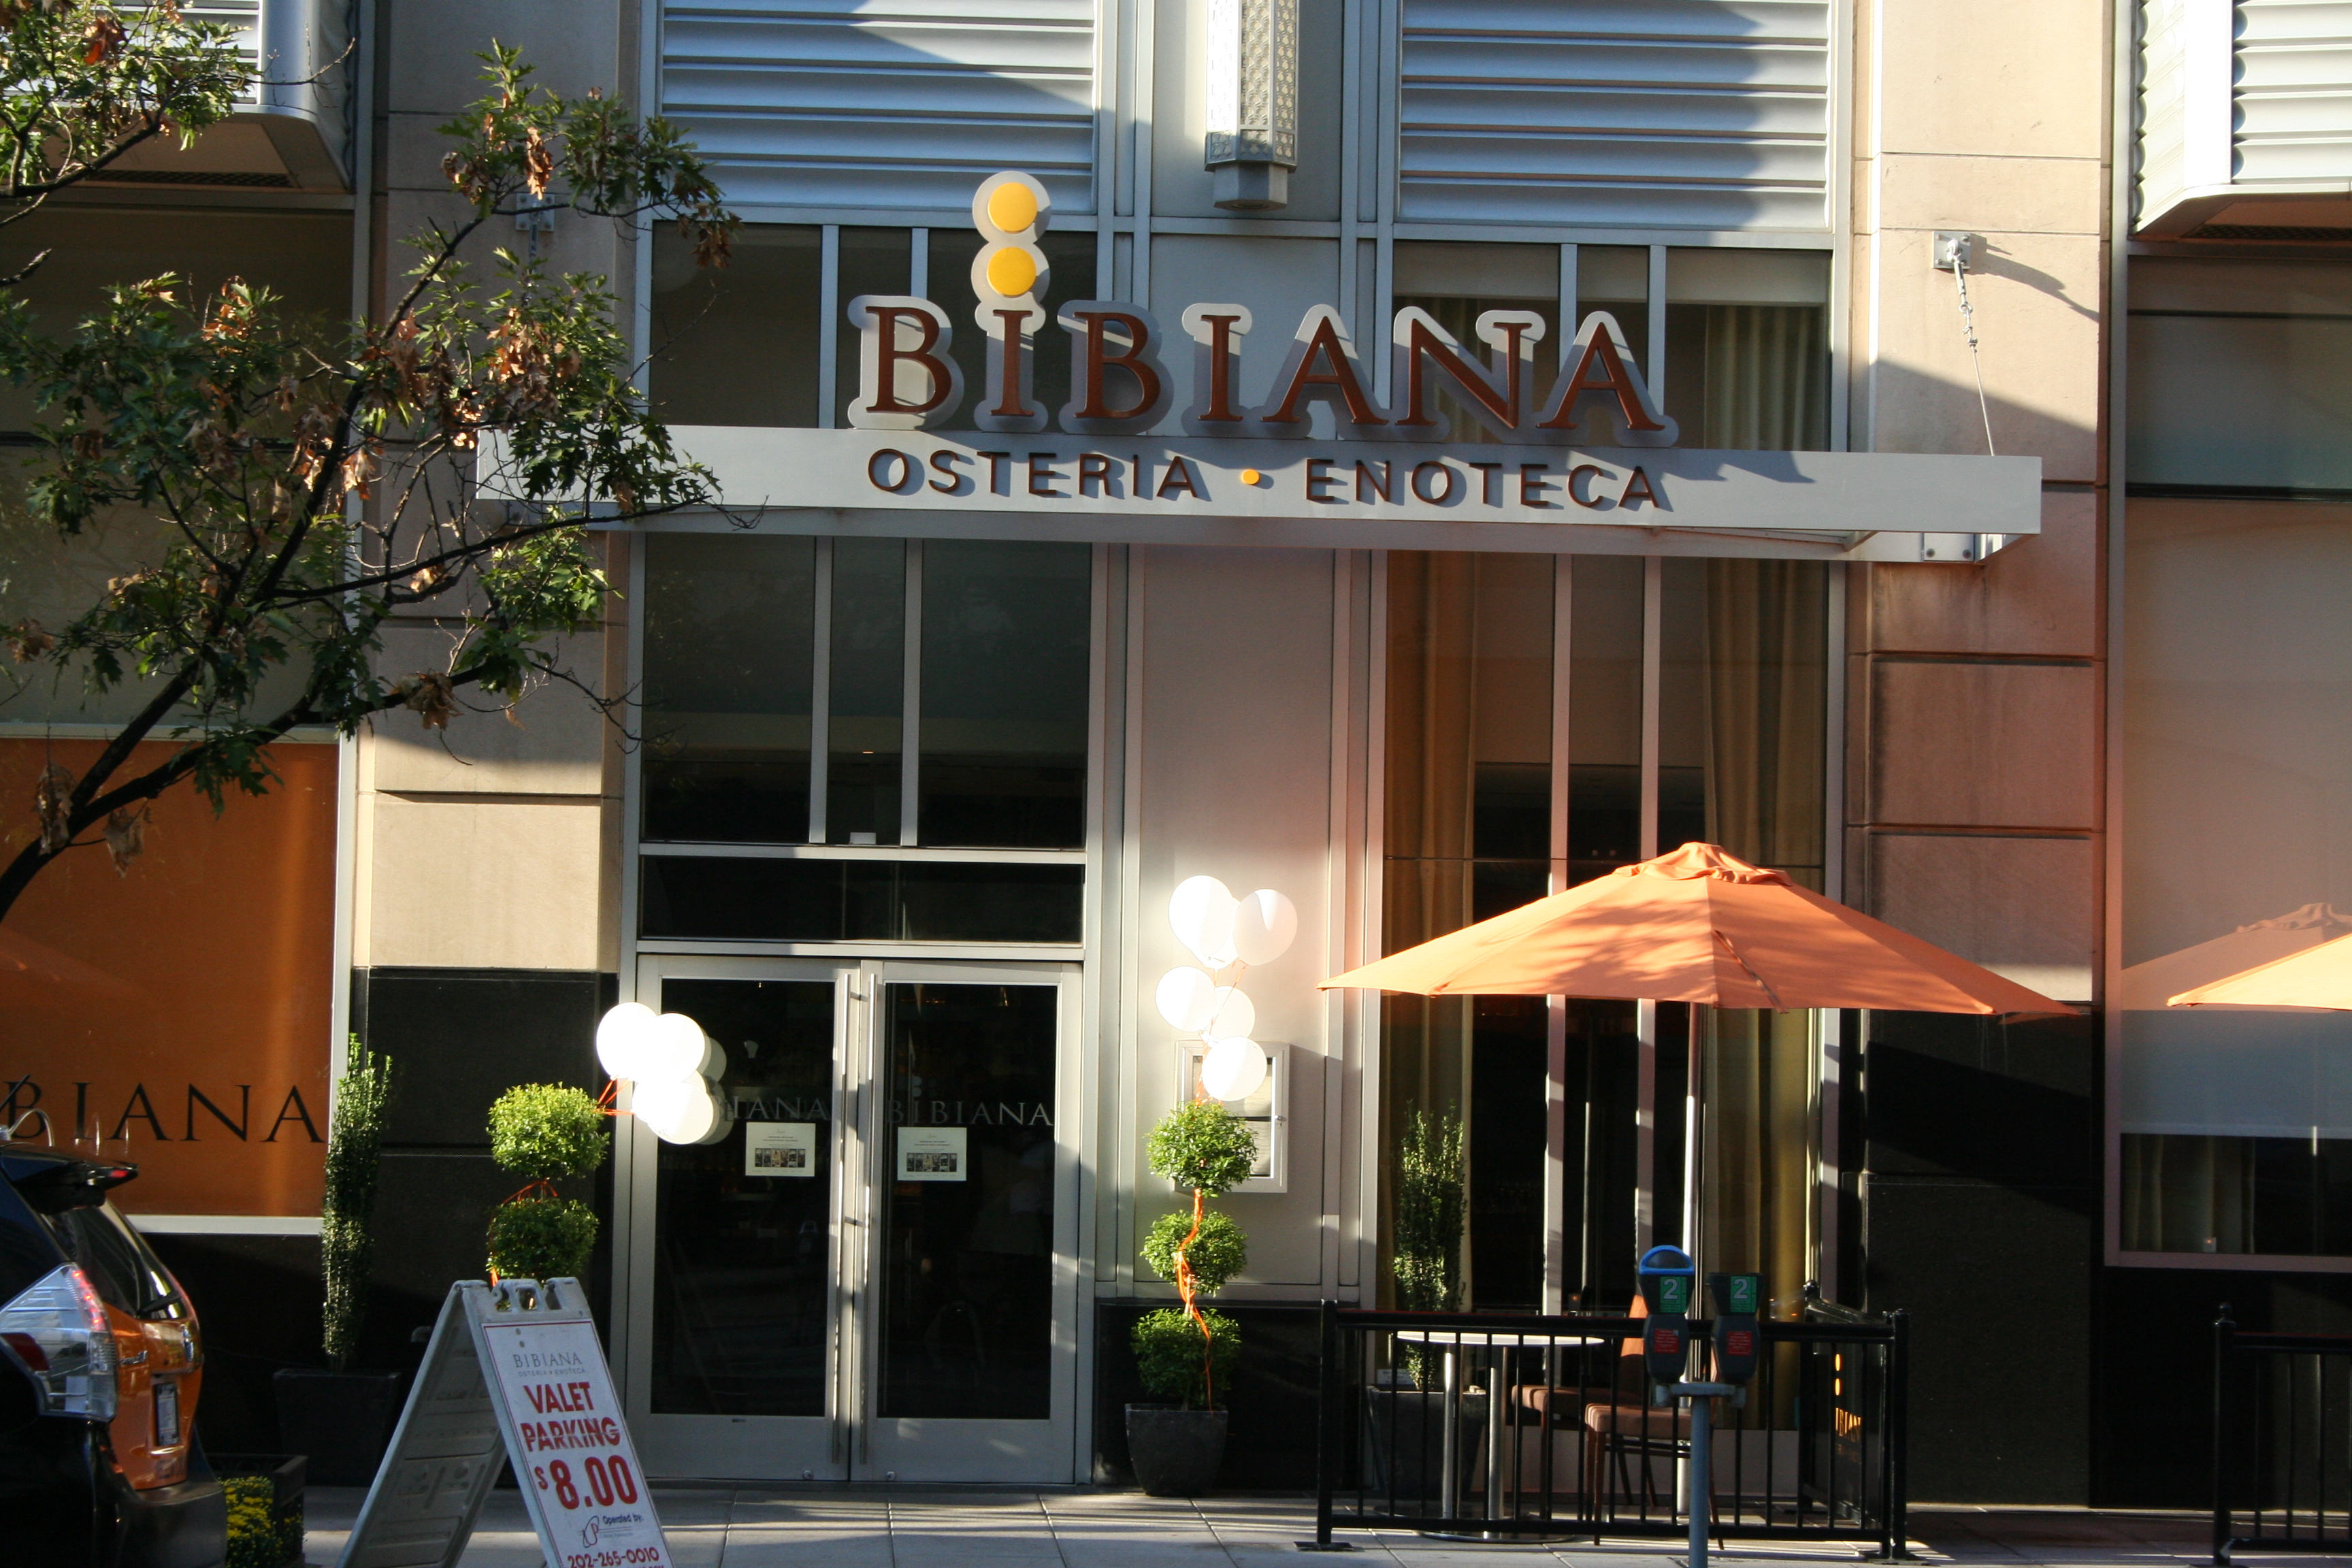 Bibiana Osteria Enoteca is celebrating its sixth anniversary. (Photo: Mark Heckathorn/DC on Heels)